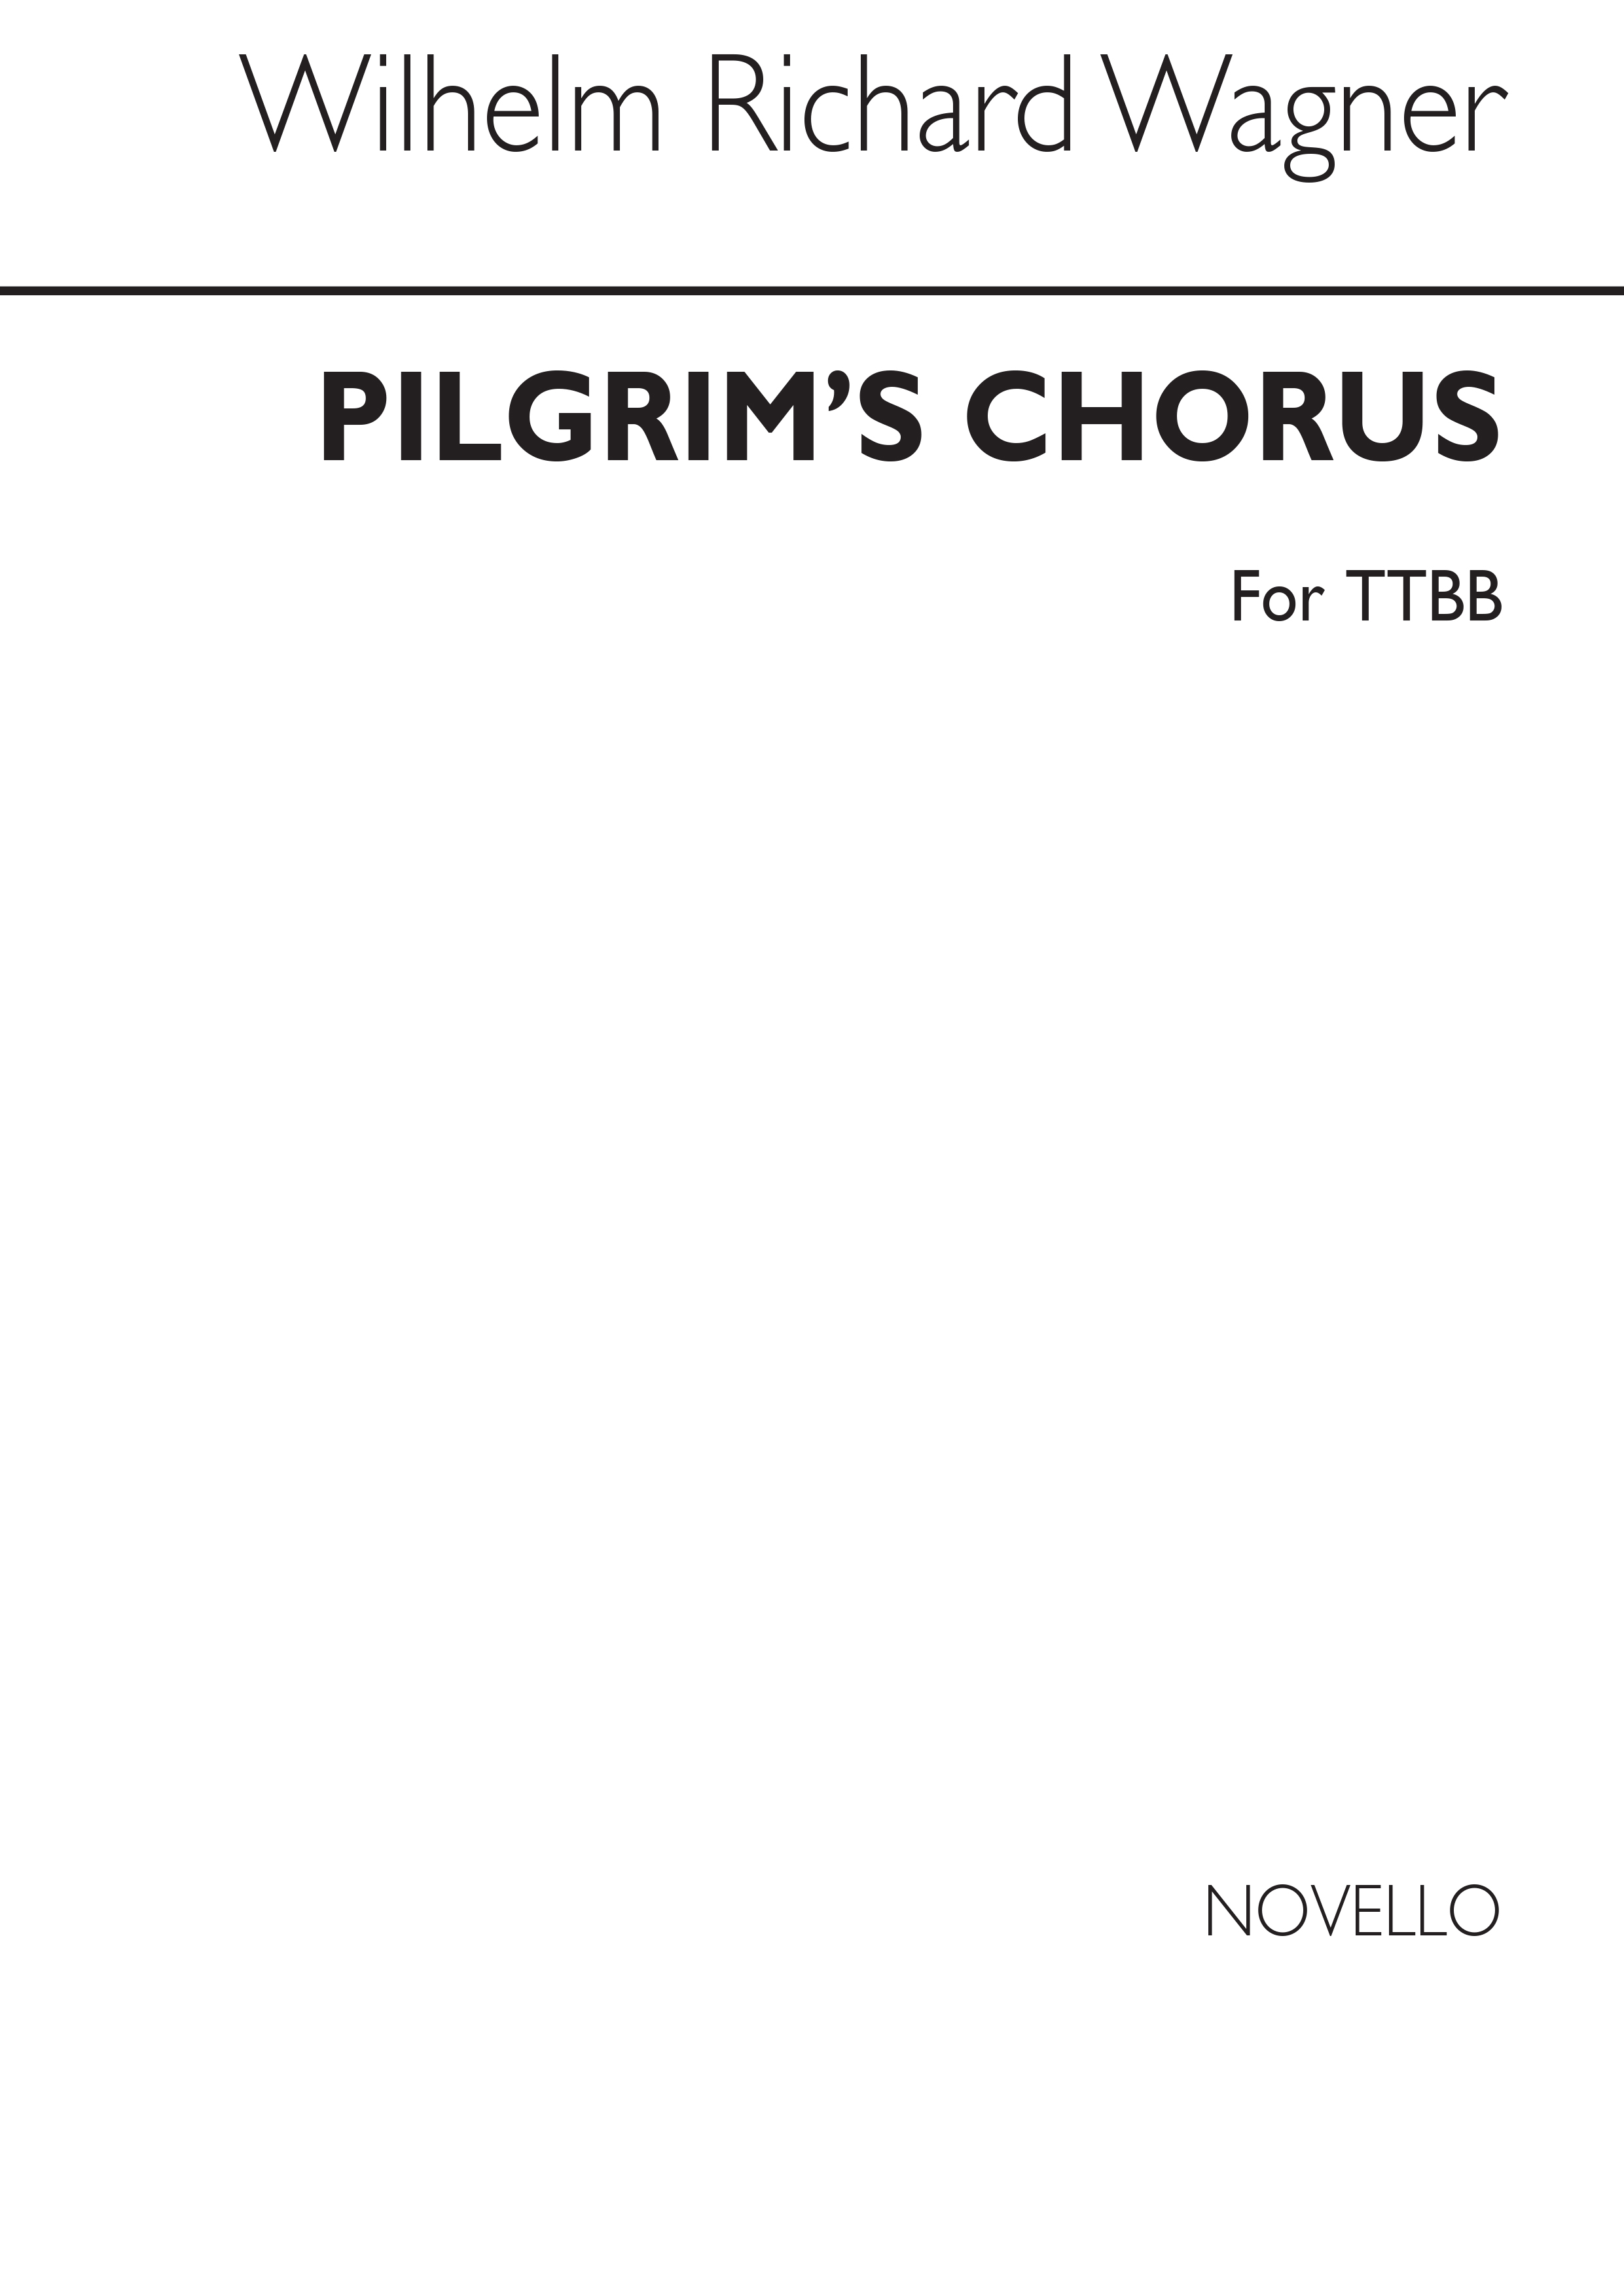 Richard Wagner: Pilgrim's Chorus (Tannhauser): TTBB: Vocal Score